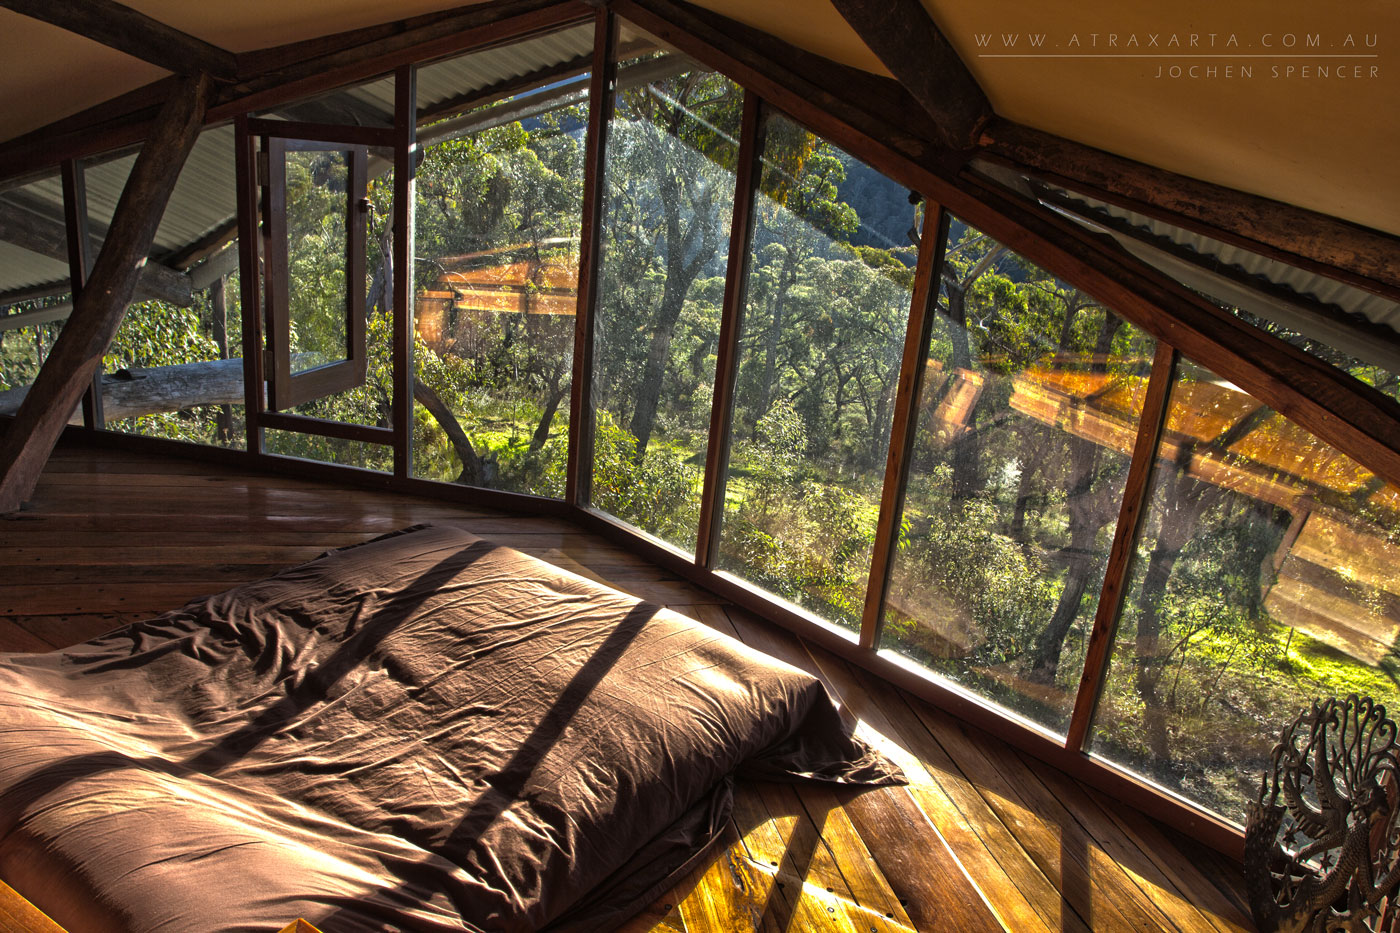 Dream Cabin Loft #1, Wollemi Cabins, Blue Mountains Australia